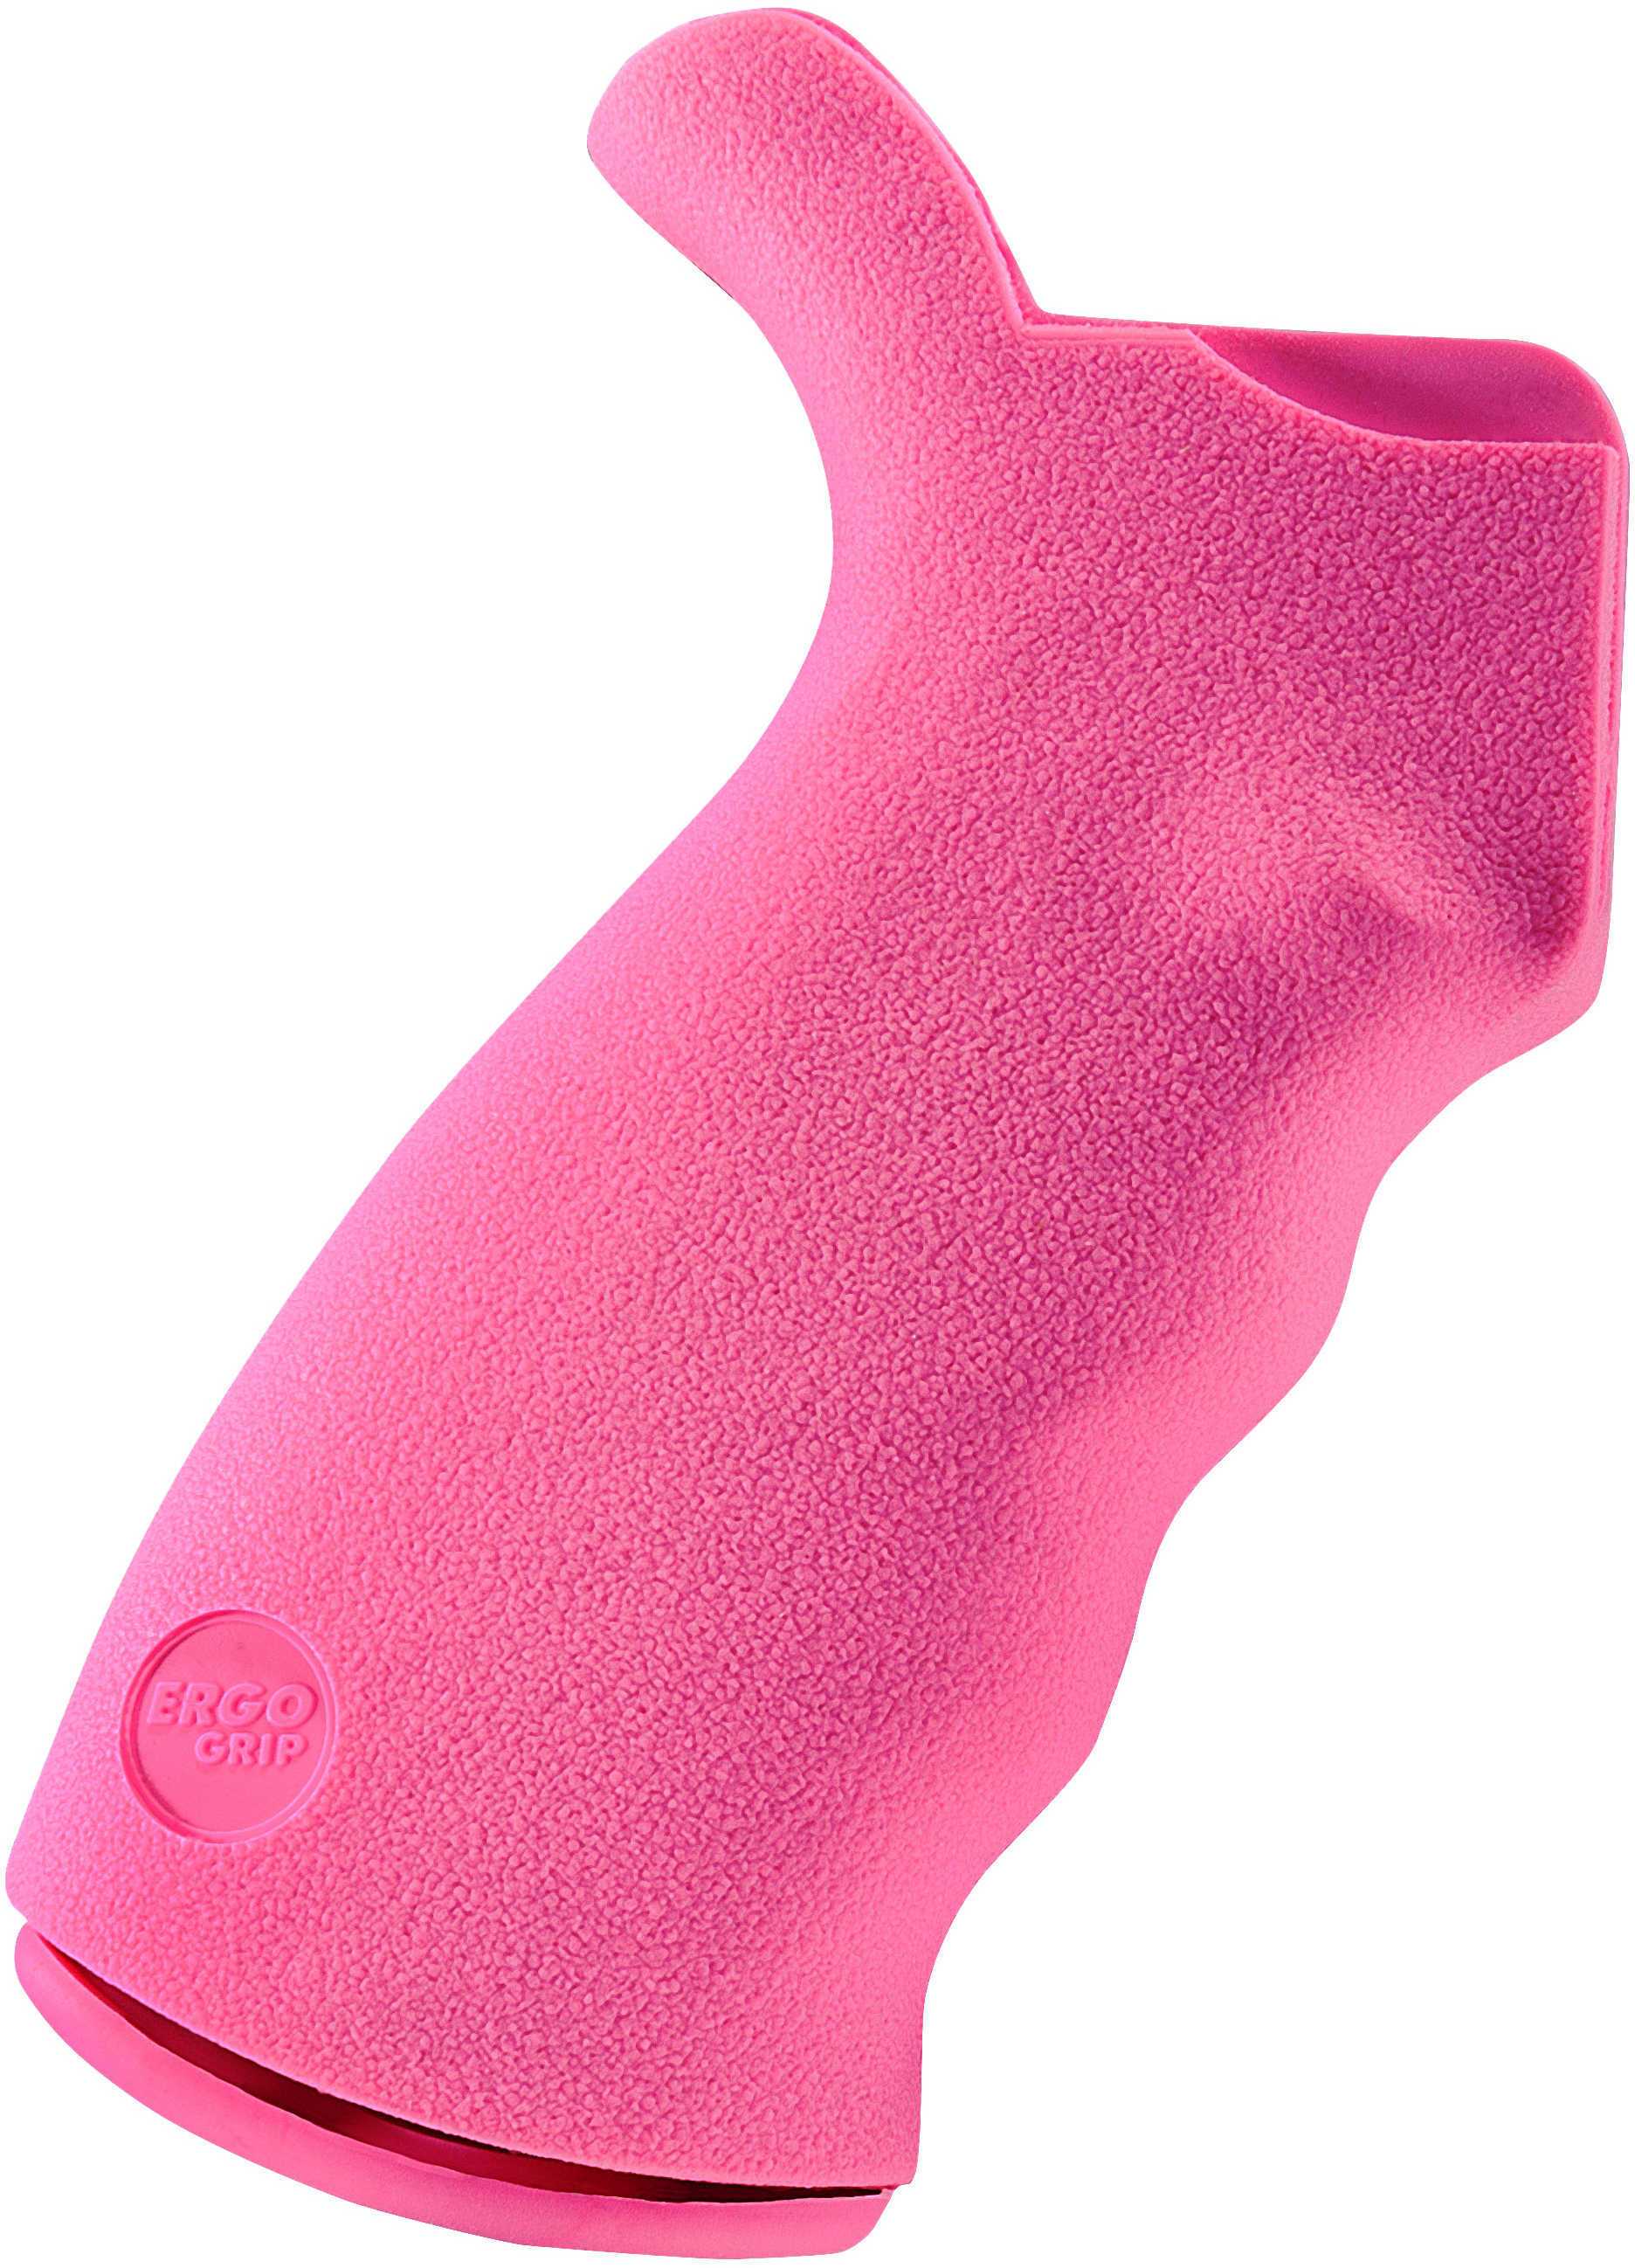 Ergo AR 15/M16 Grip Kit Ambidextrous Pink 4005-PINK